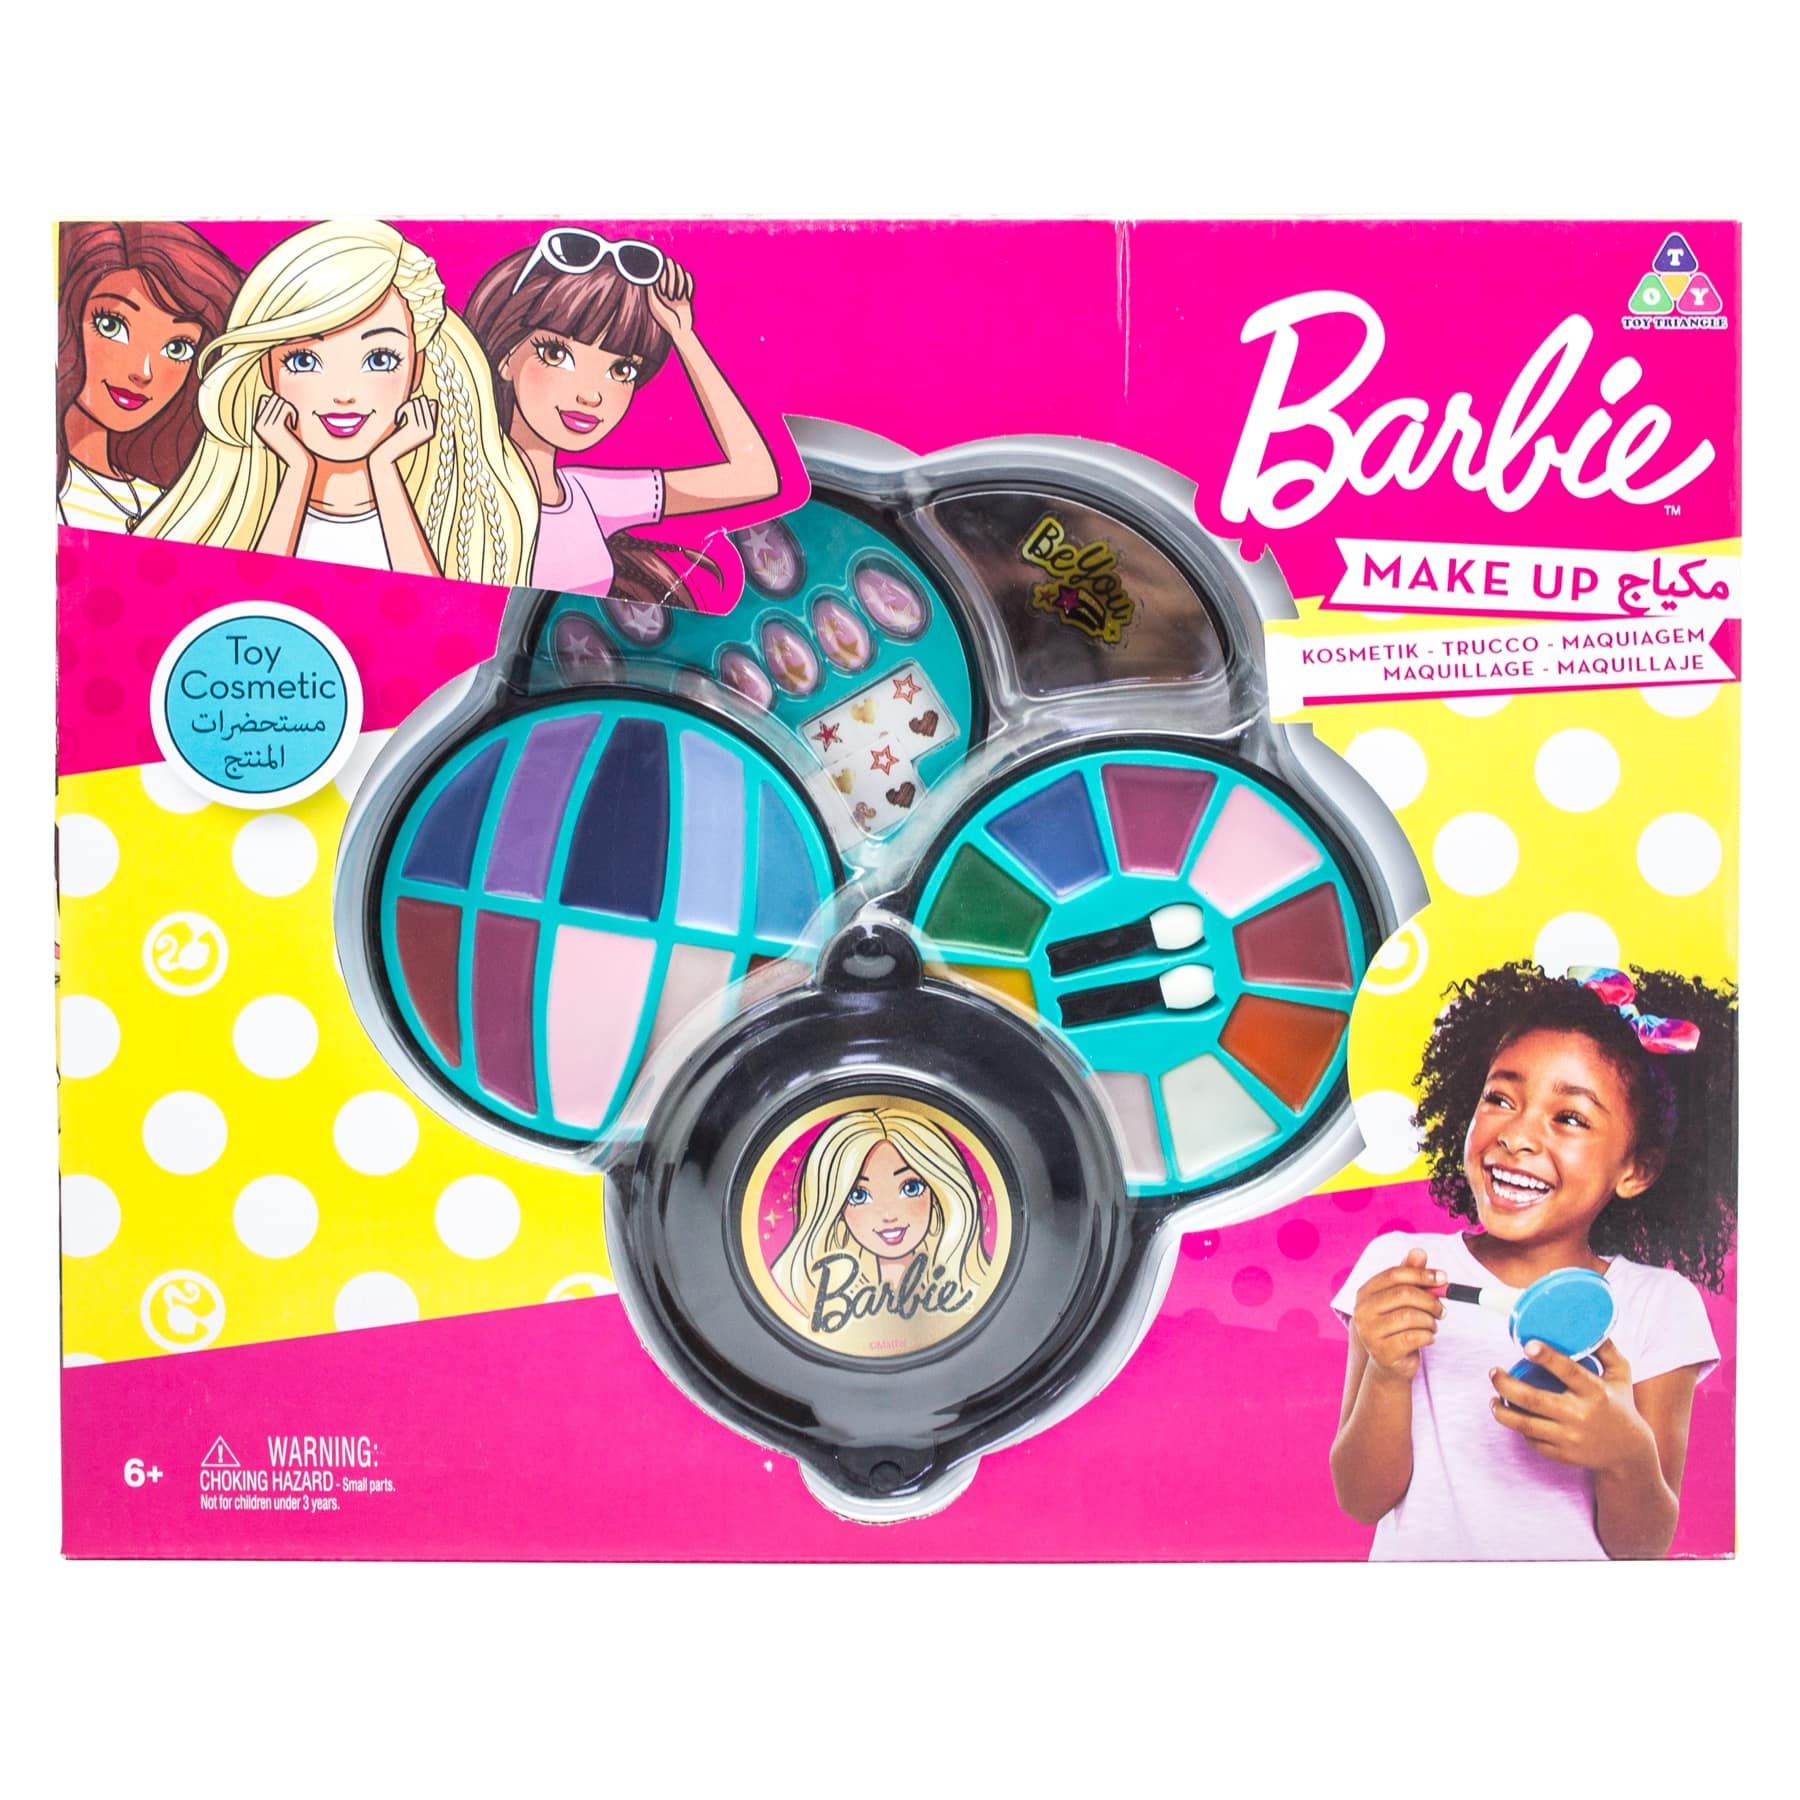 Shop Barbie 4-Decks Round Cosmetics Set Online in Qatar | Toys 'R' Us Qatar